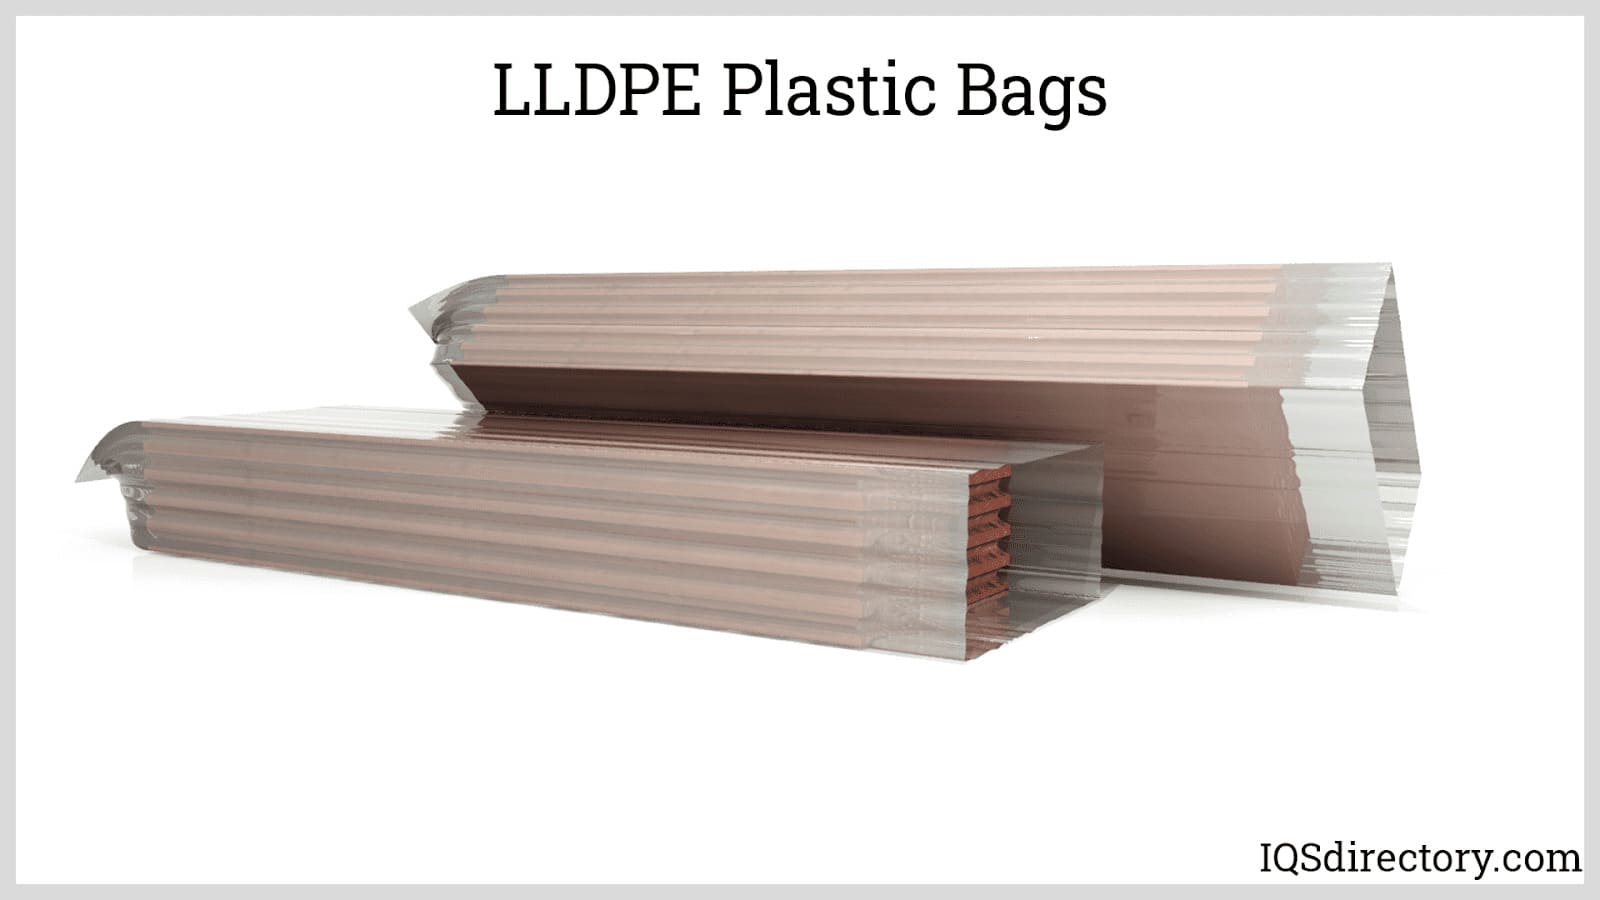 LLDPE Plastic Bags